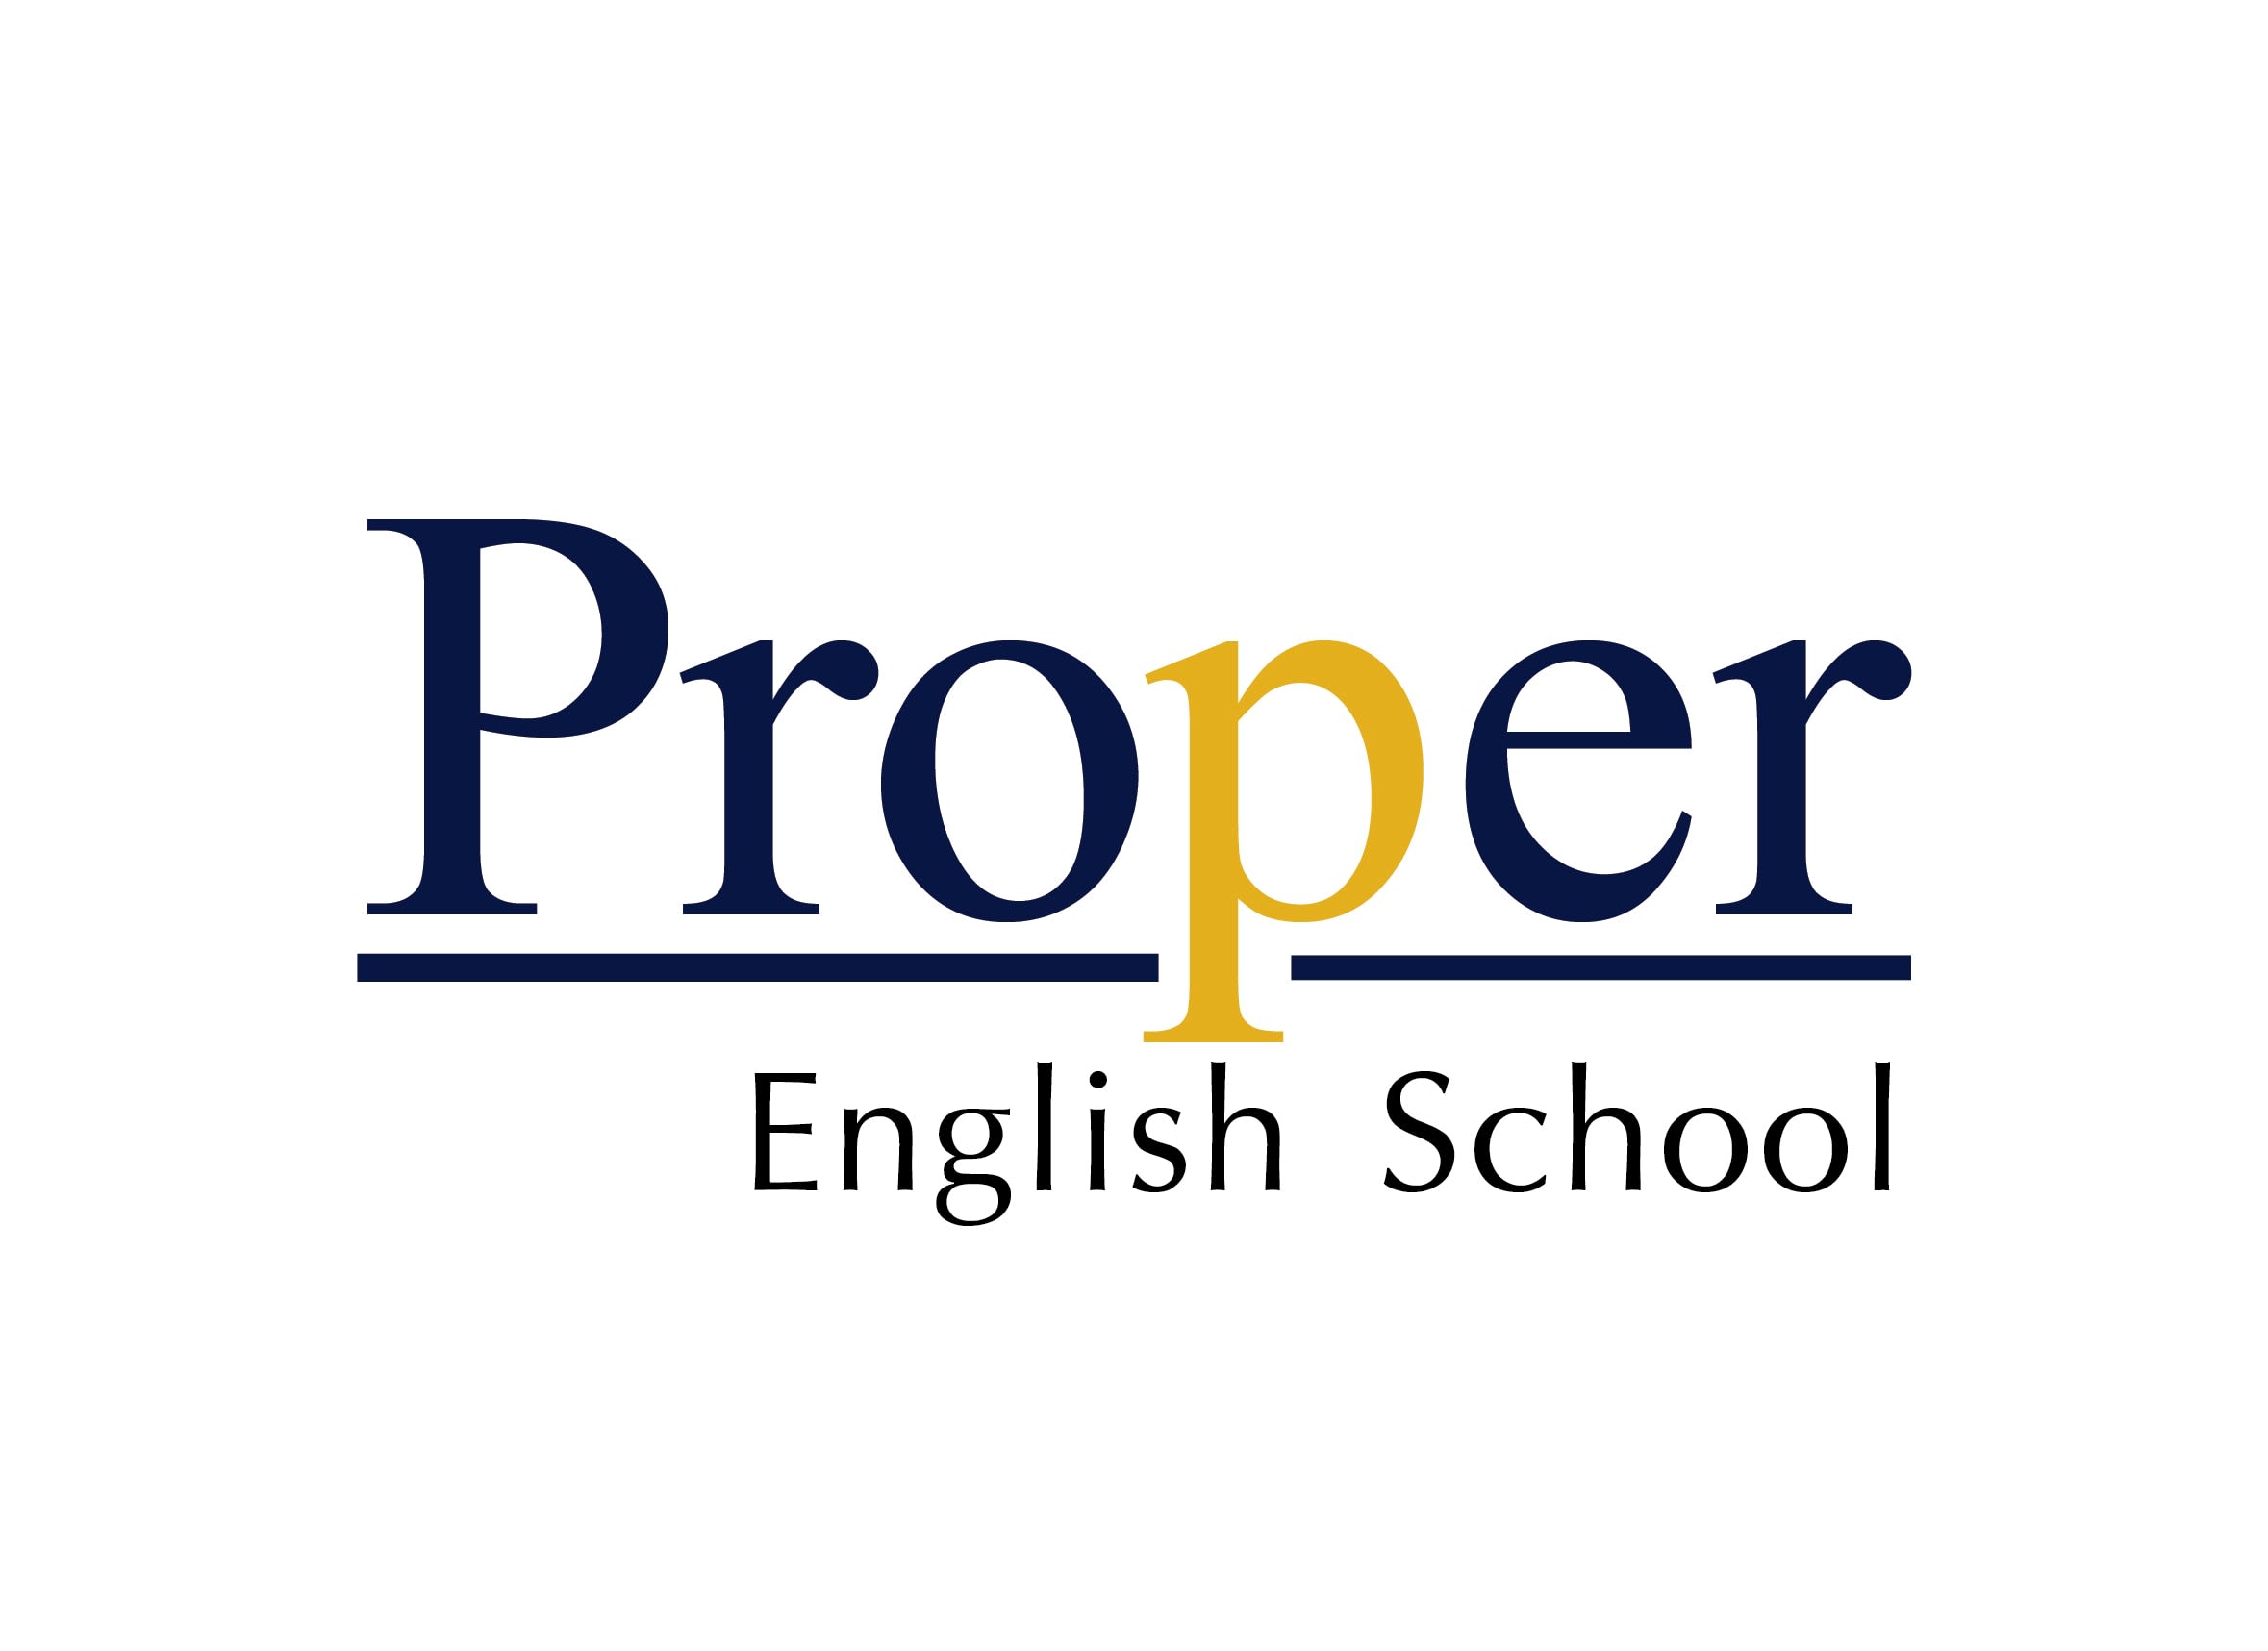 Proper English School